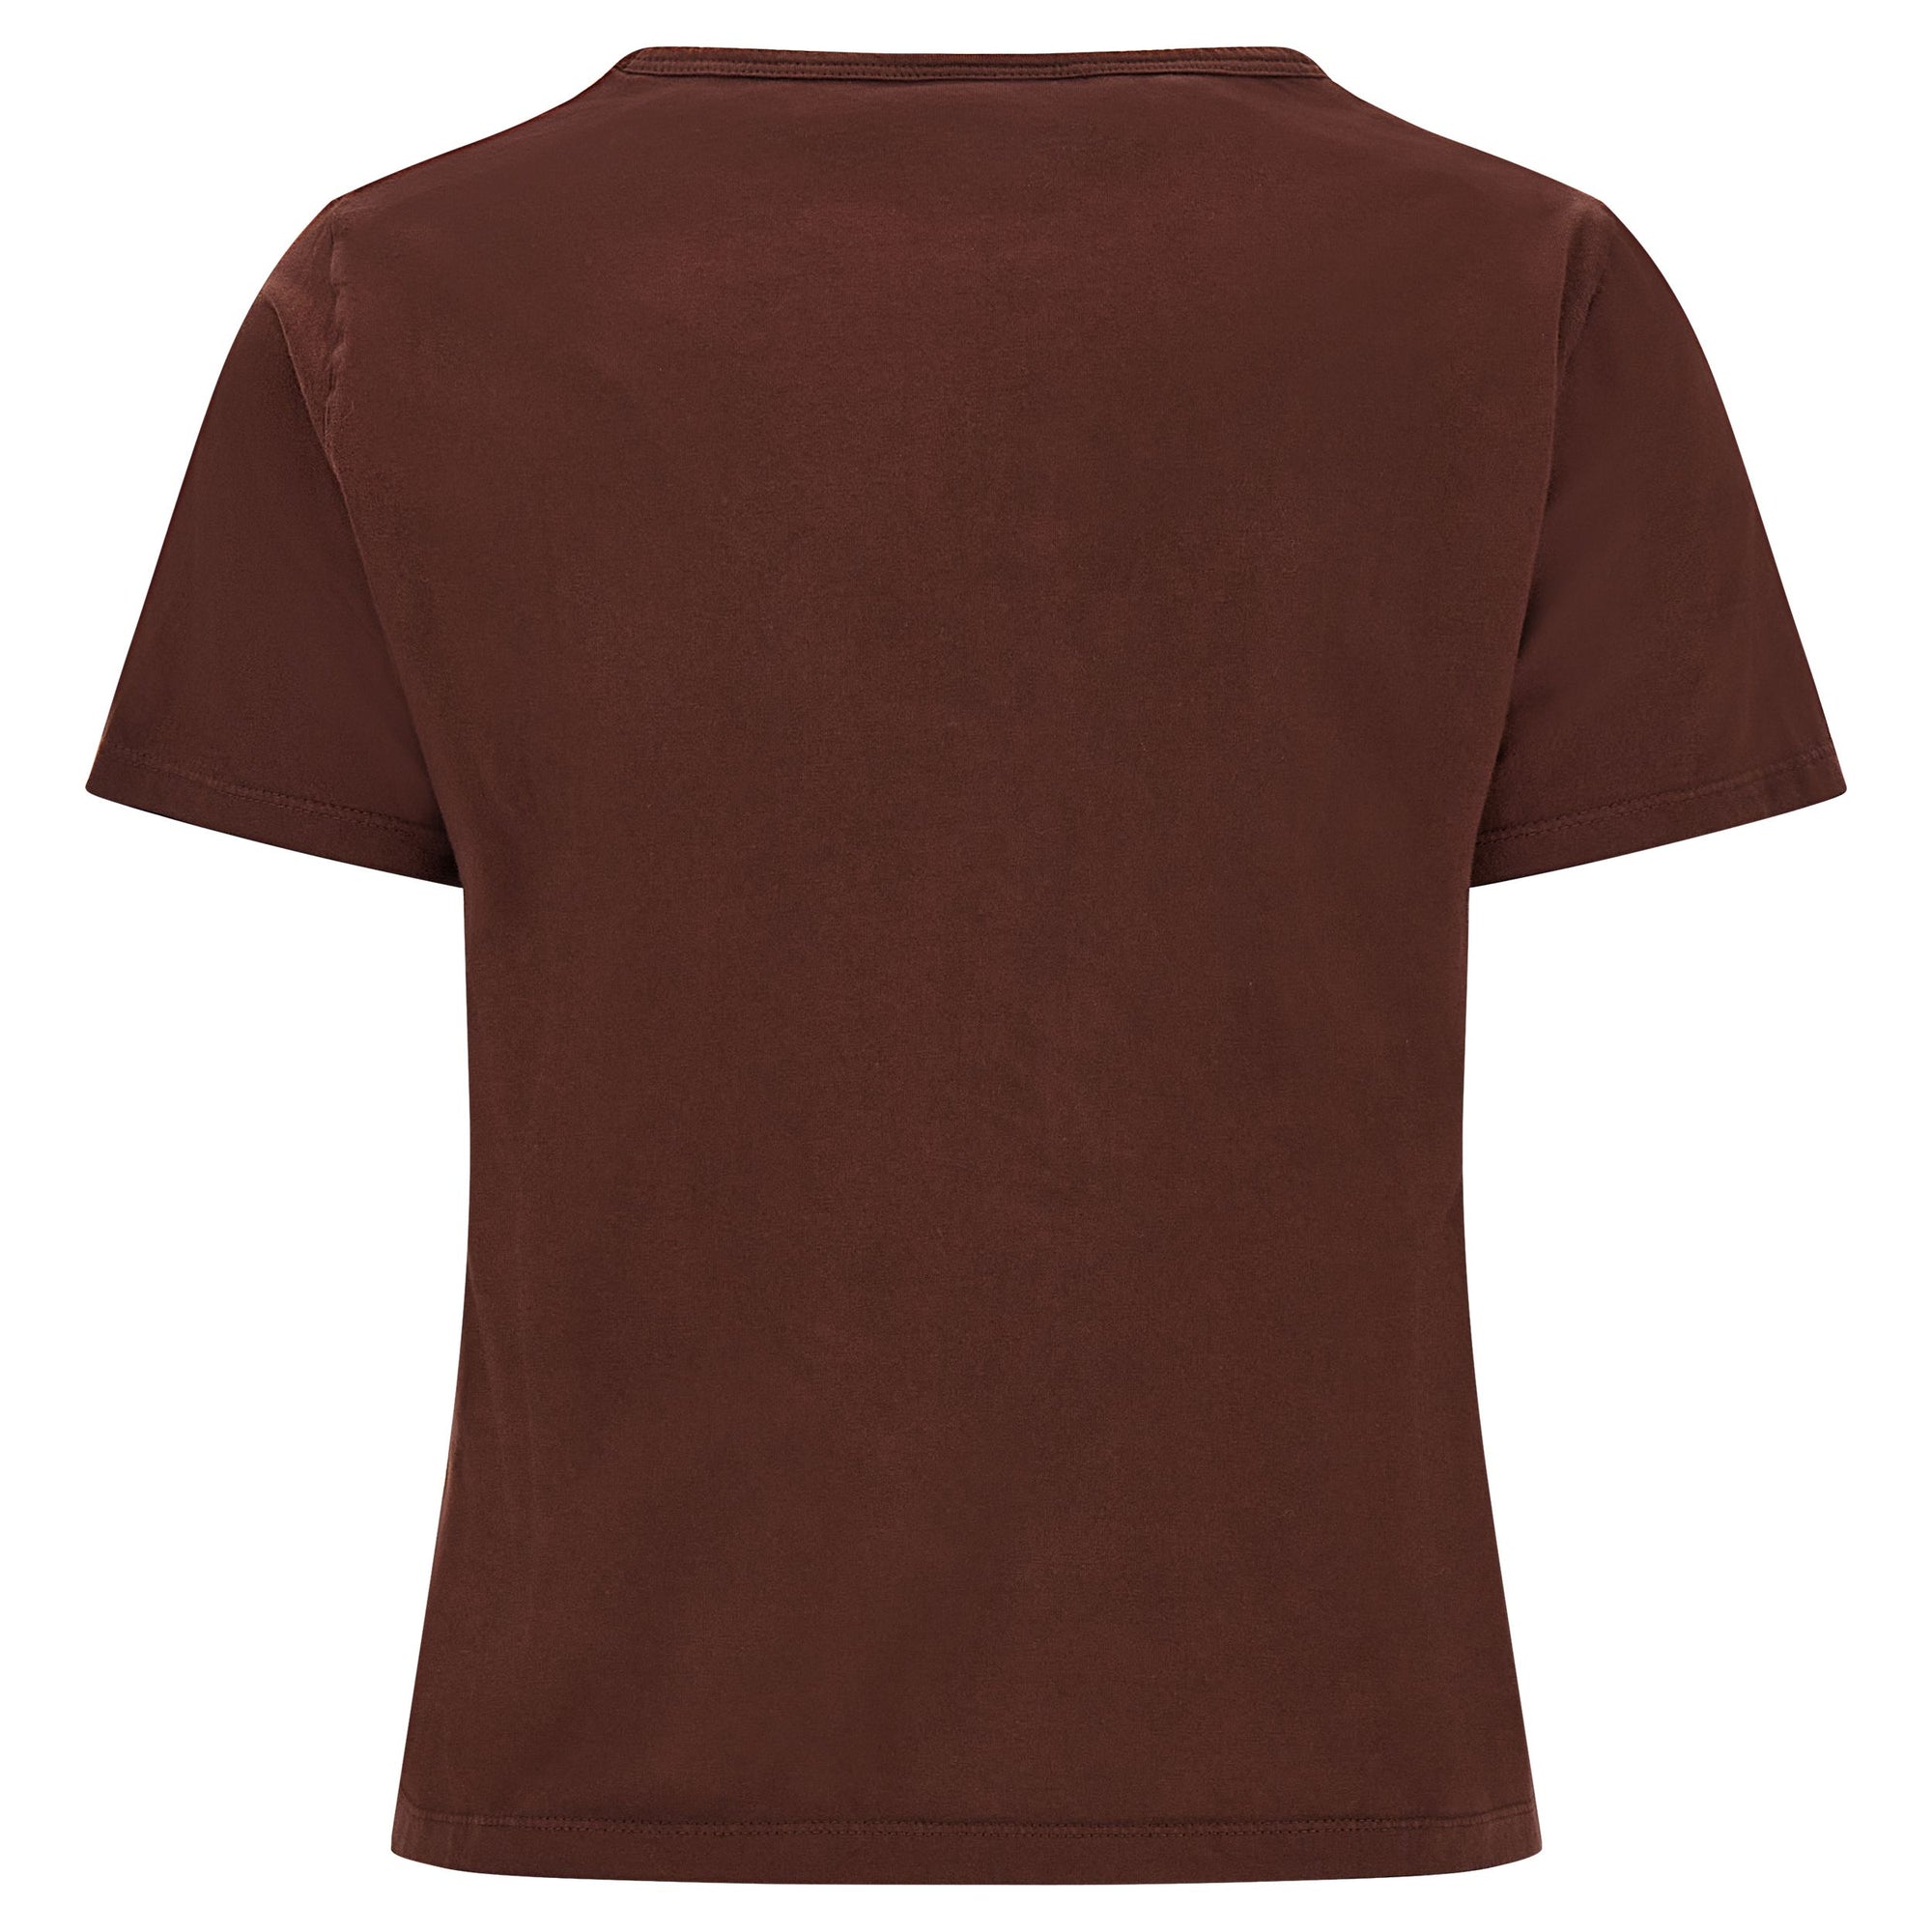 Freddy T-shirt crop top comfort in jersey leggero FAIRC022X M79X Chocolate Fondant Direct Dyed